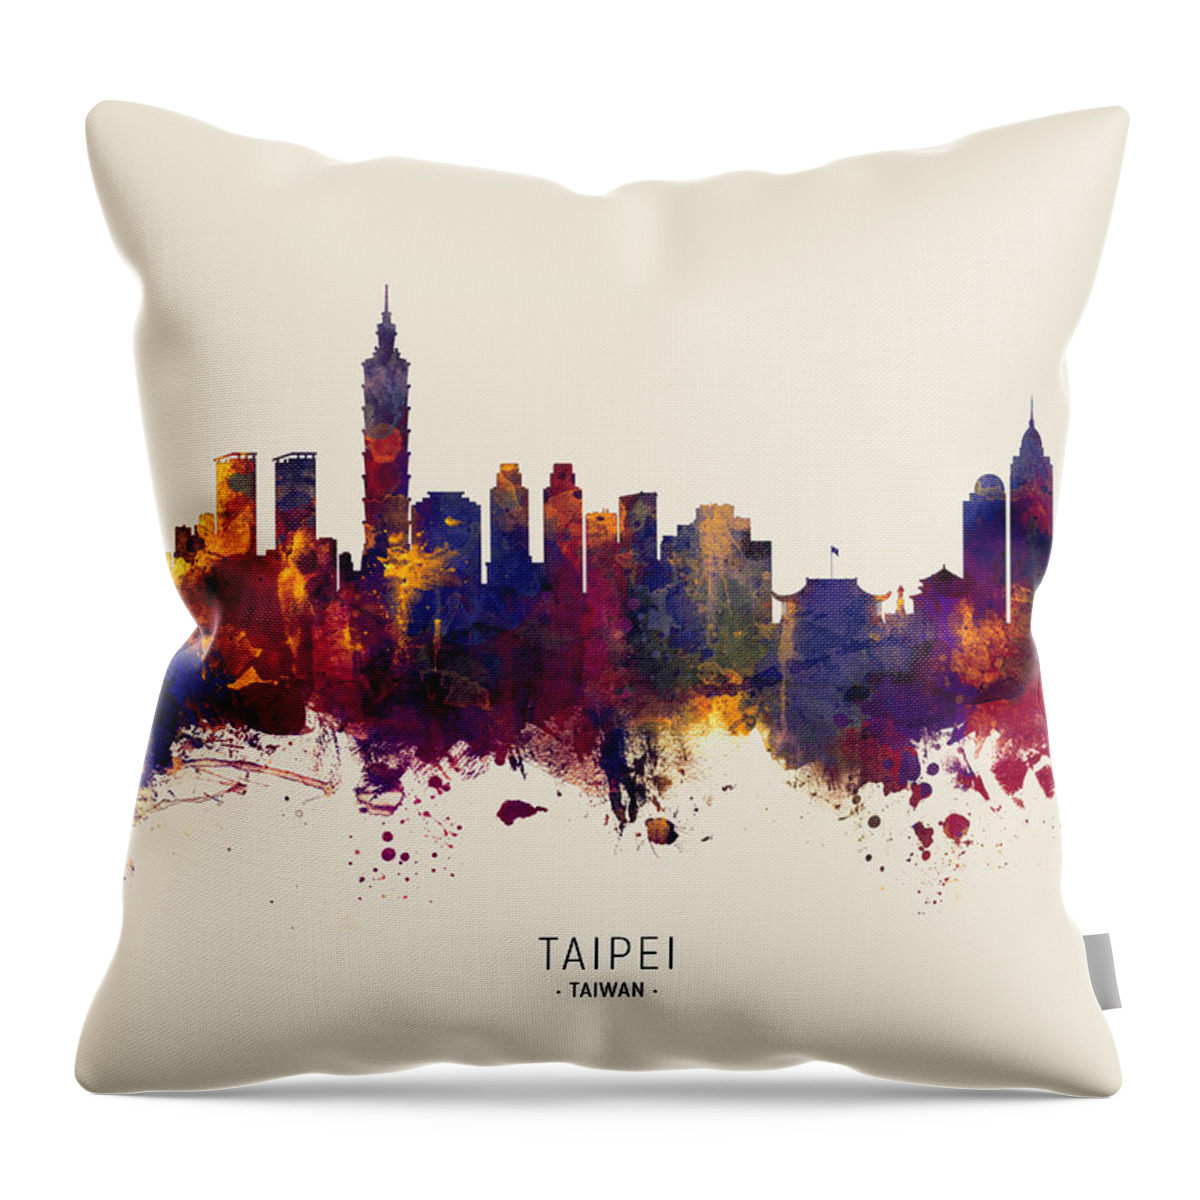 Taipei Throw Pillow featuring the digital art Taipei Taiwan Skyline #30 by Michael Tompsett